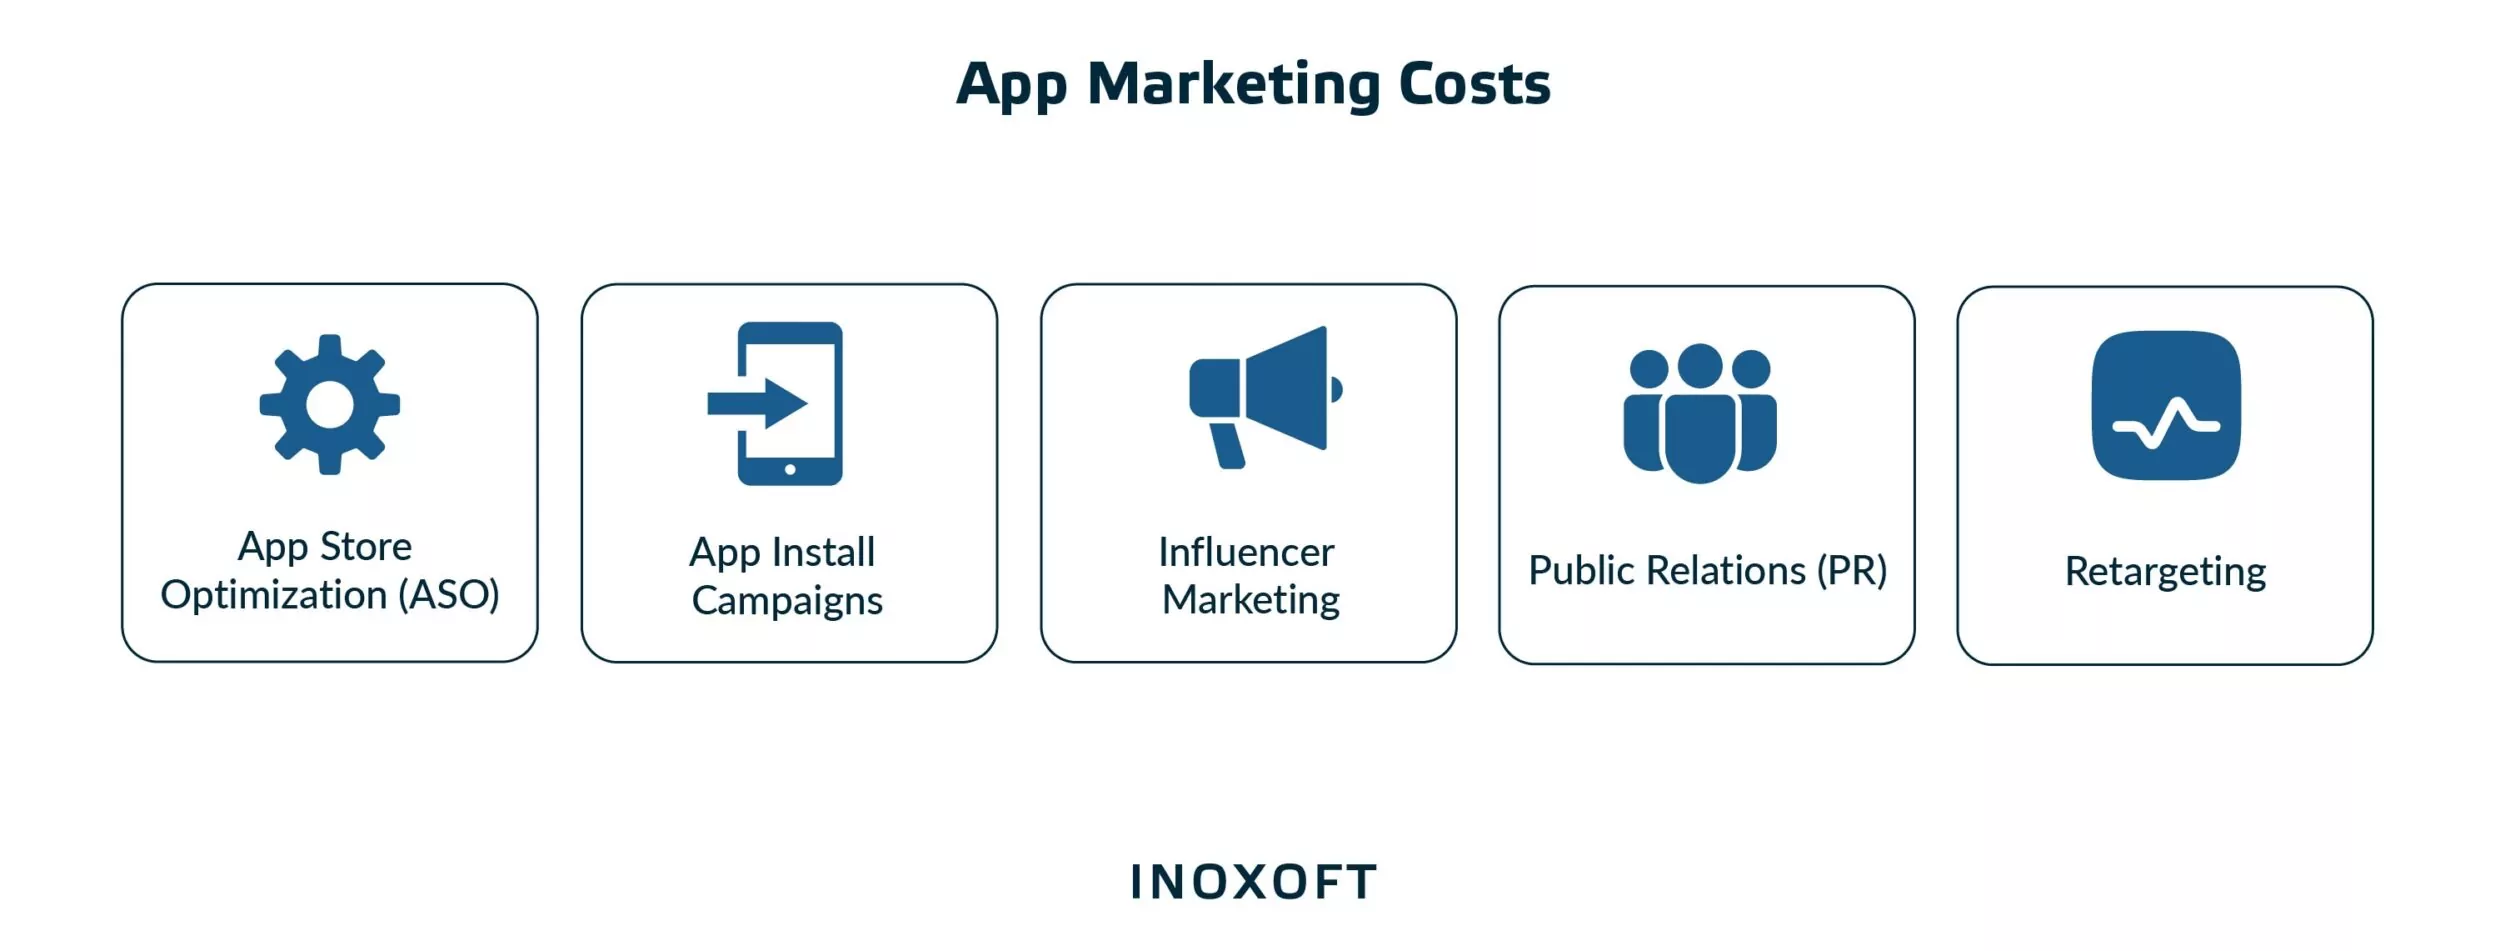 App Marketing Costs